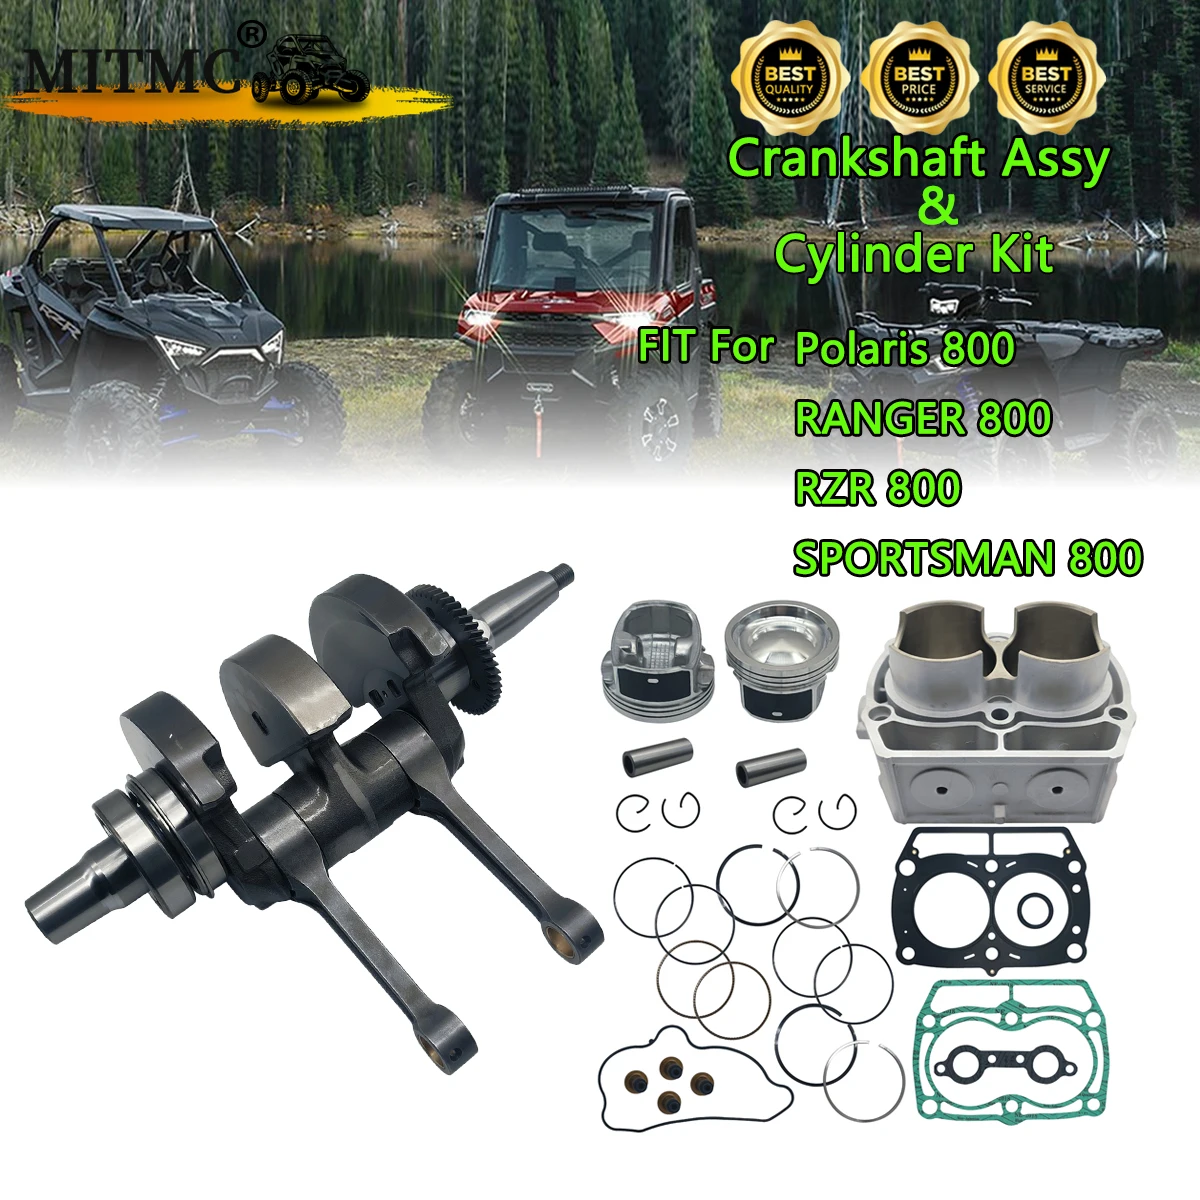 

Crankshaft Assy And Cylinder kit For Polaris RANGER RZR SPORTSMAN 800 ATV UTV 2205112 2204393 2202917 5247360 5254357